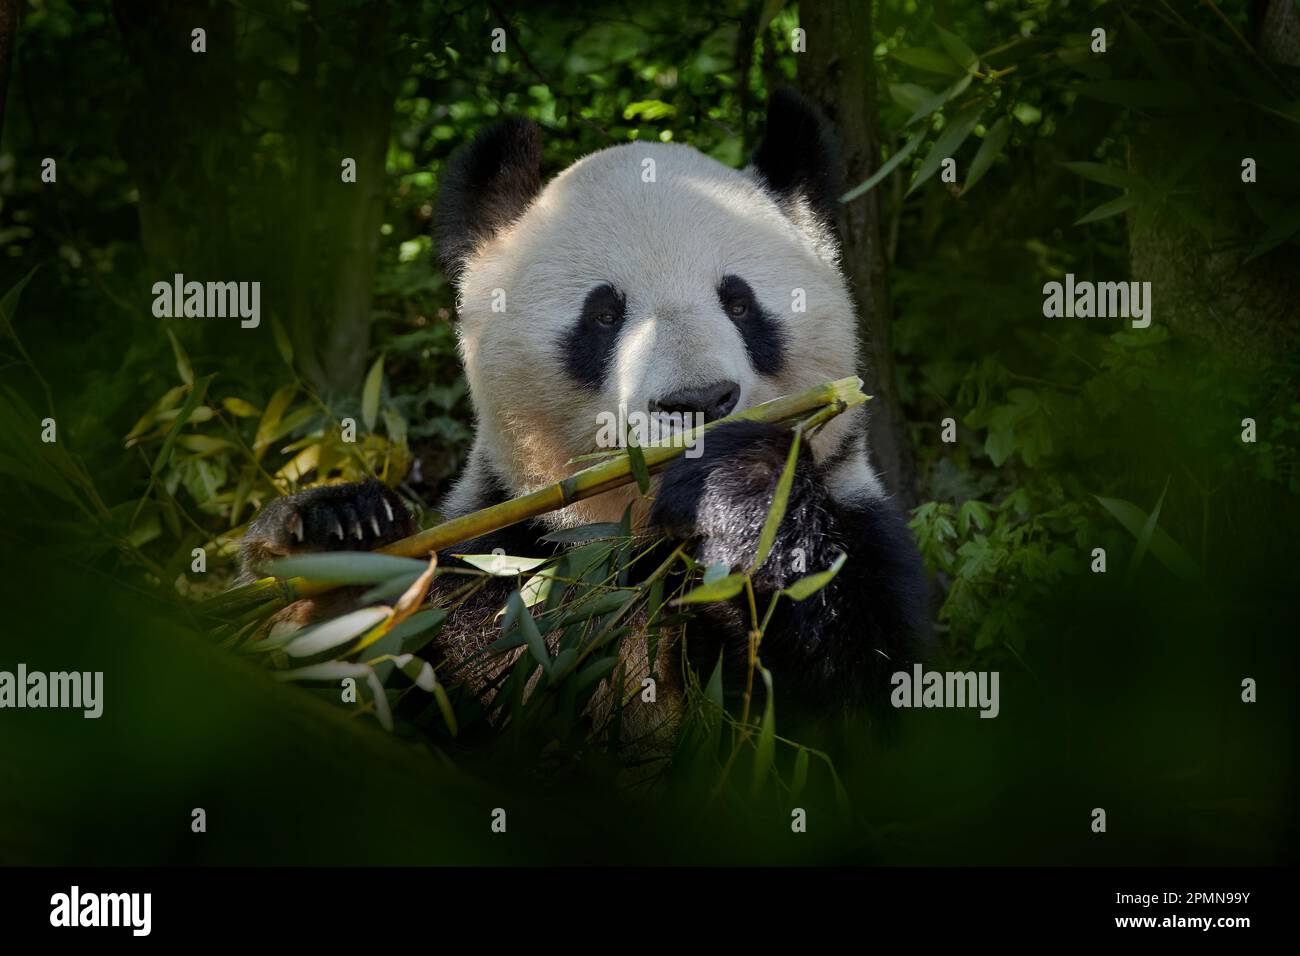 Panda bear behaviour in the nature habitat. Portrait of Giant Panda, Ailuropoda melanoleuca, feeding on bamboo tree in green vegetation. Detail portra Stock Photo